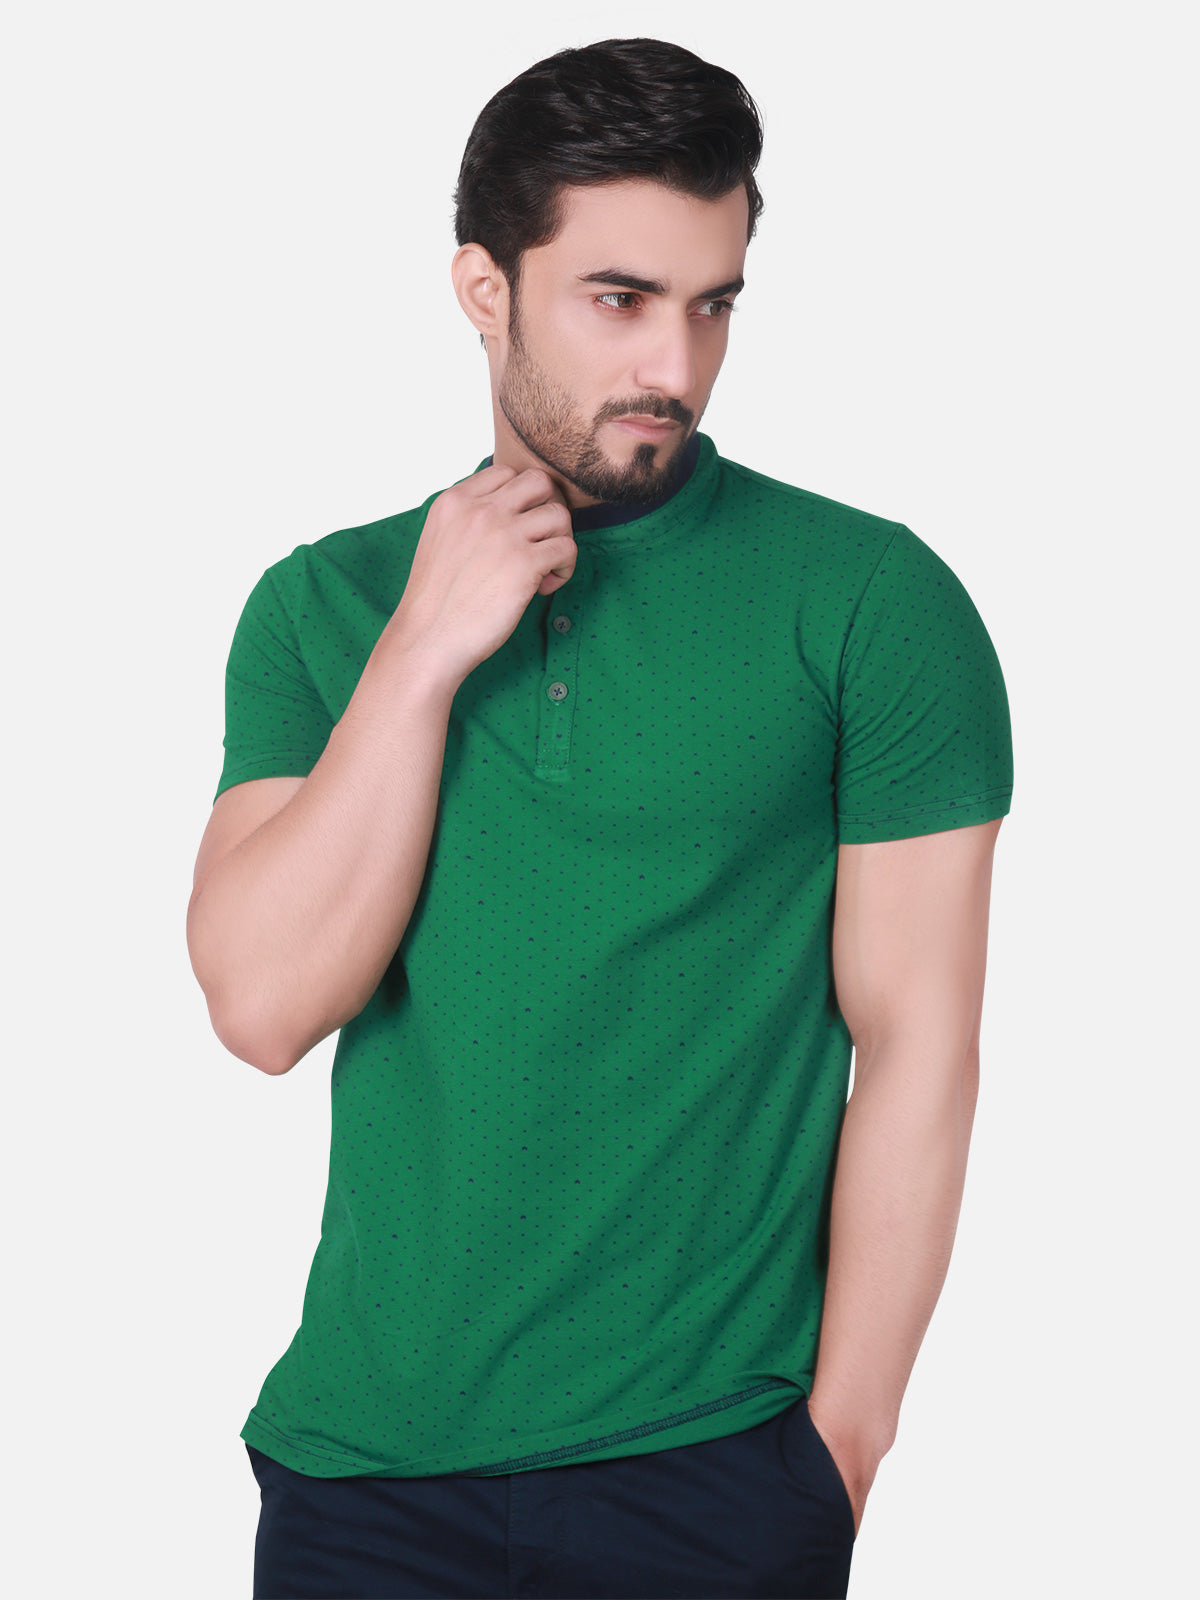 Men's Green Polo Shirt - FMTTS17-17195